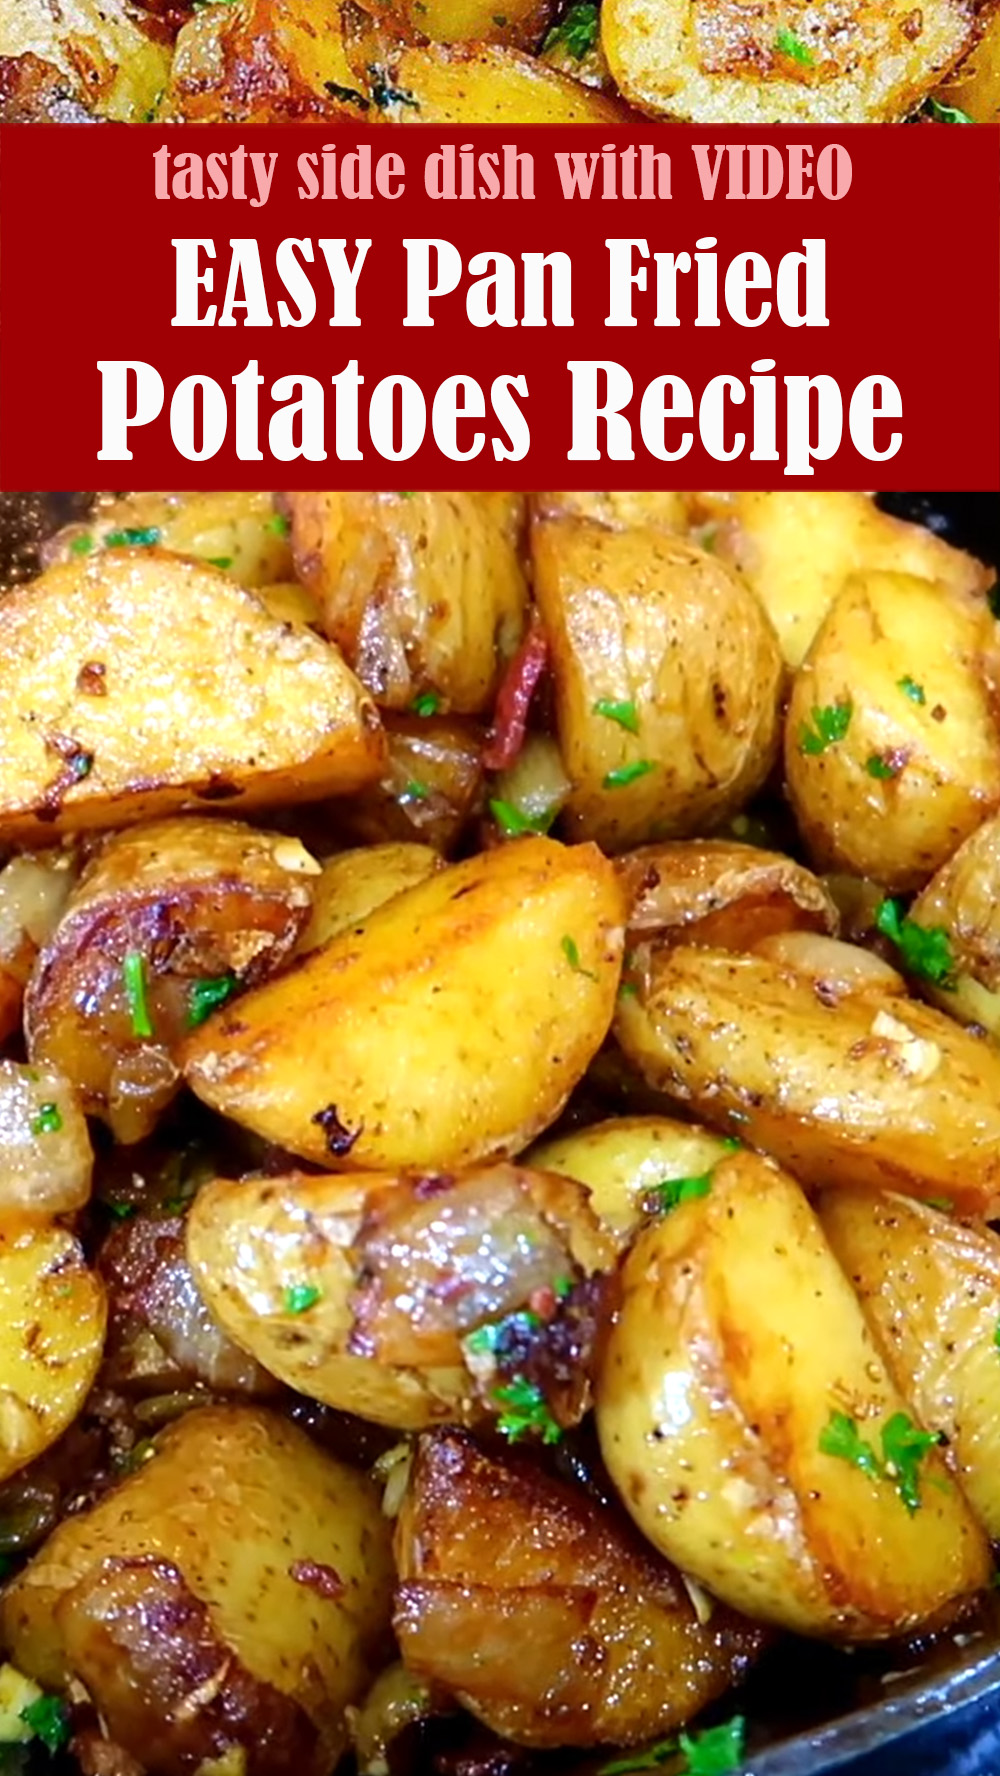 EASY Pan Fried Potatoes Recipe